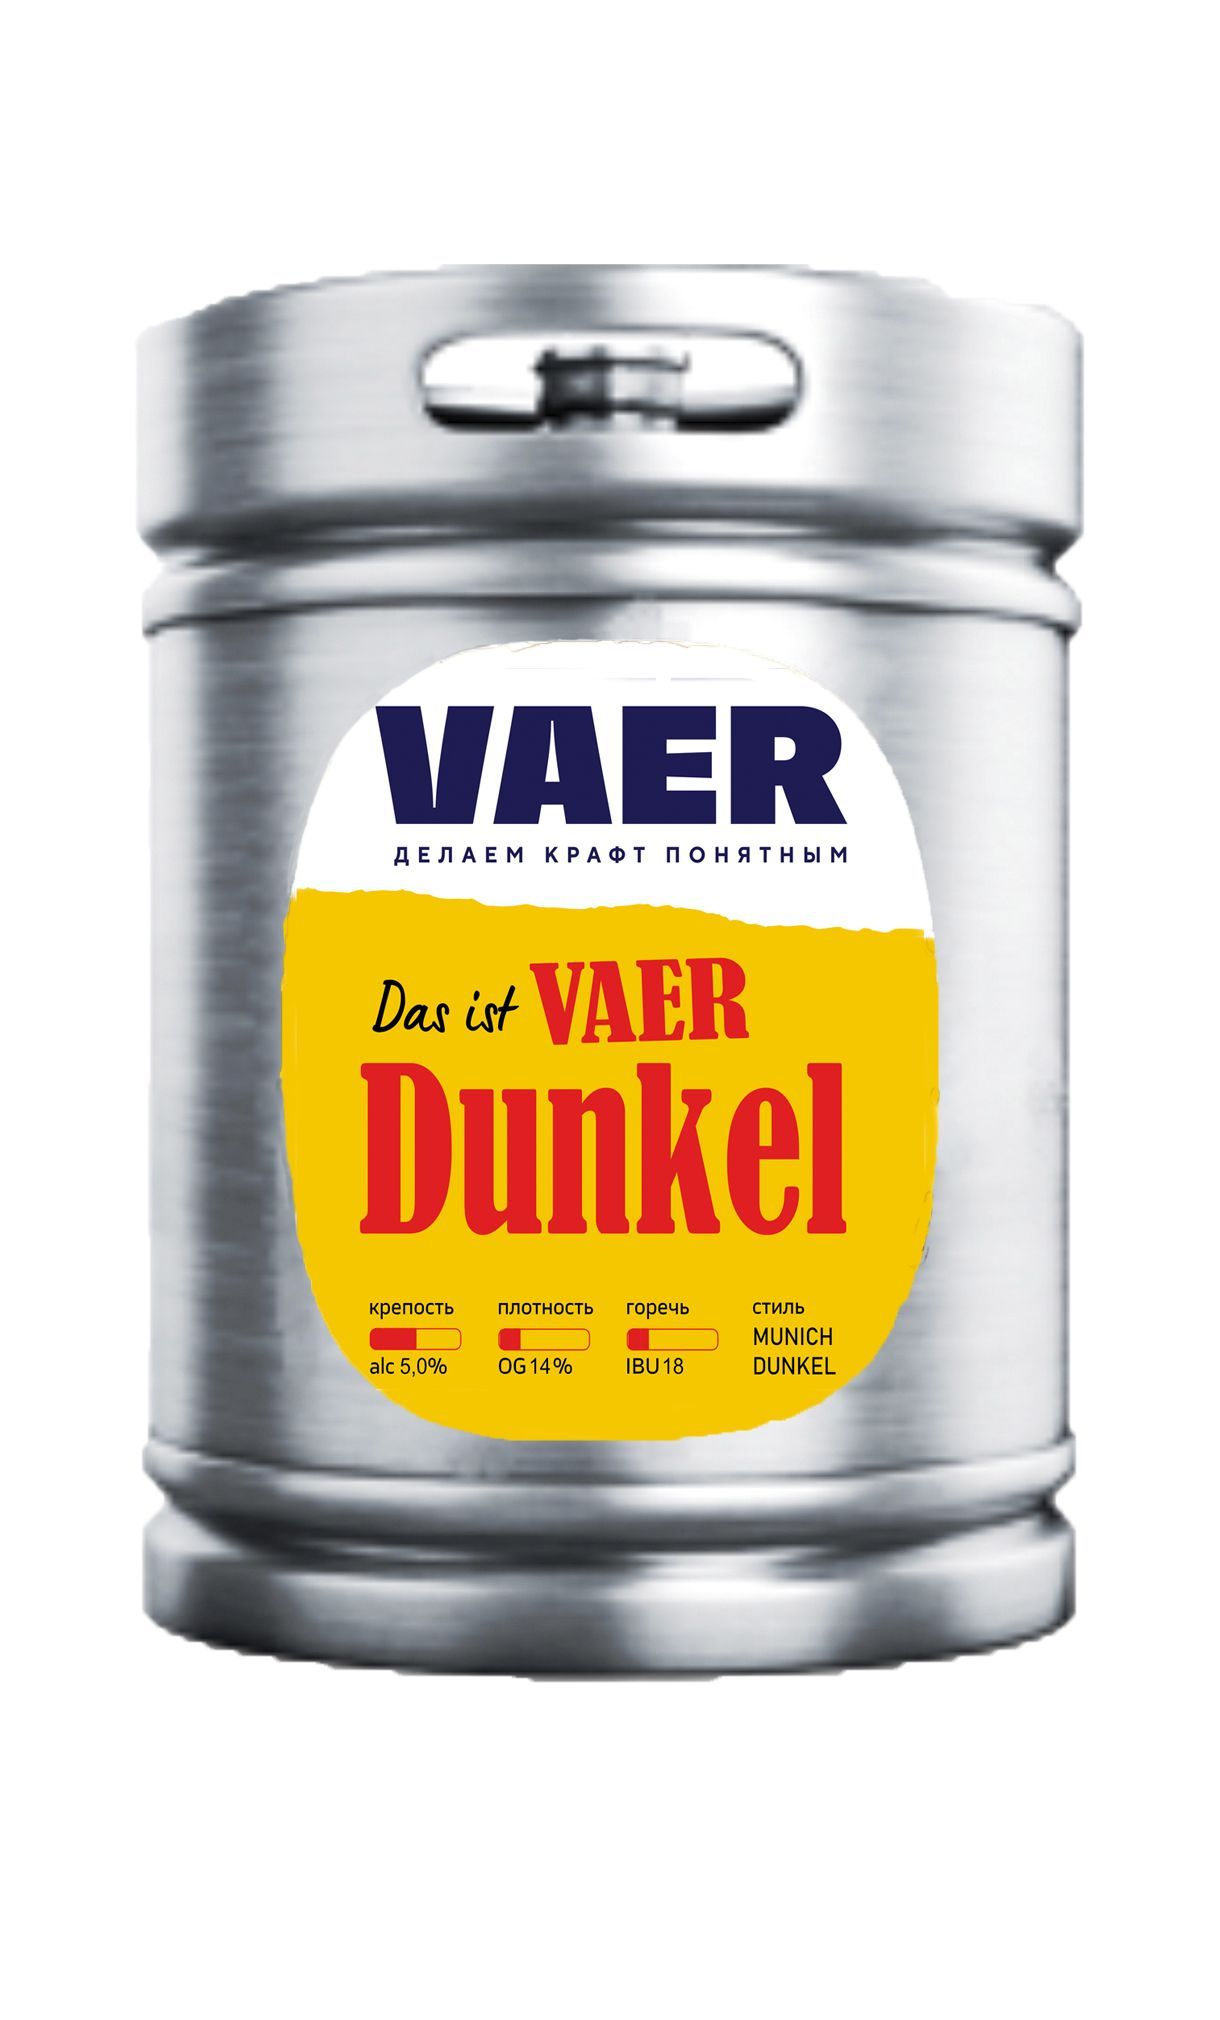 Пиво Ваер Дункель 5,0%